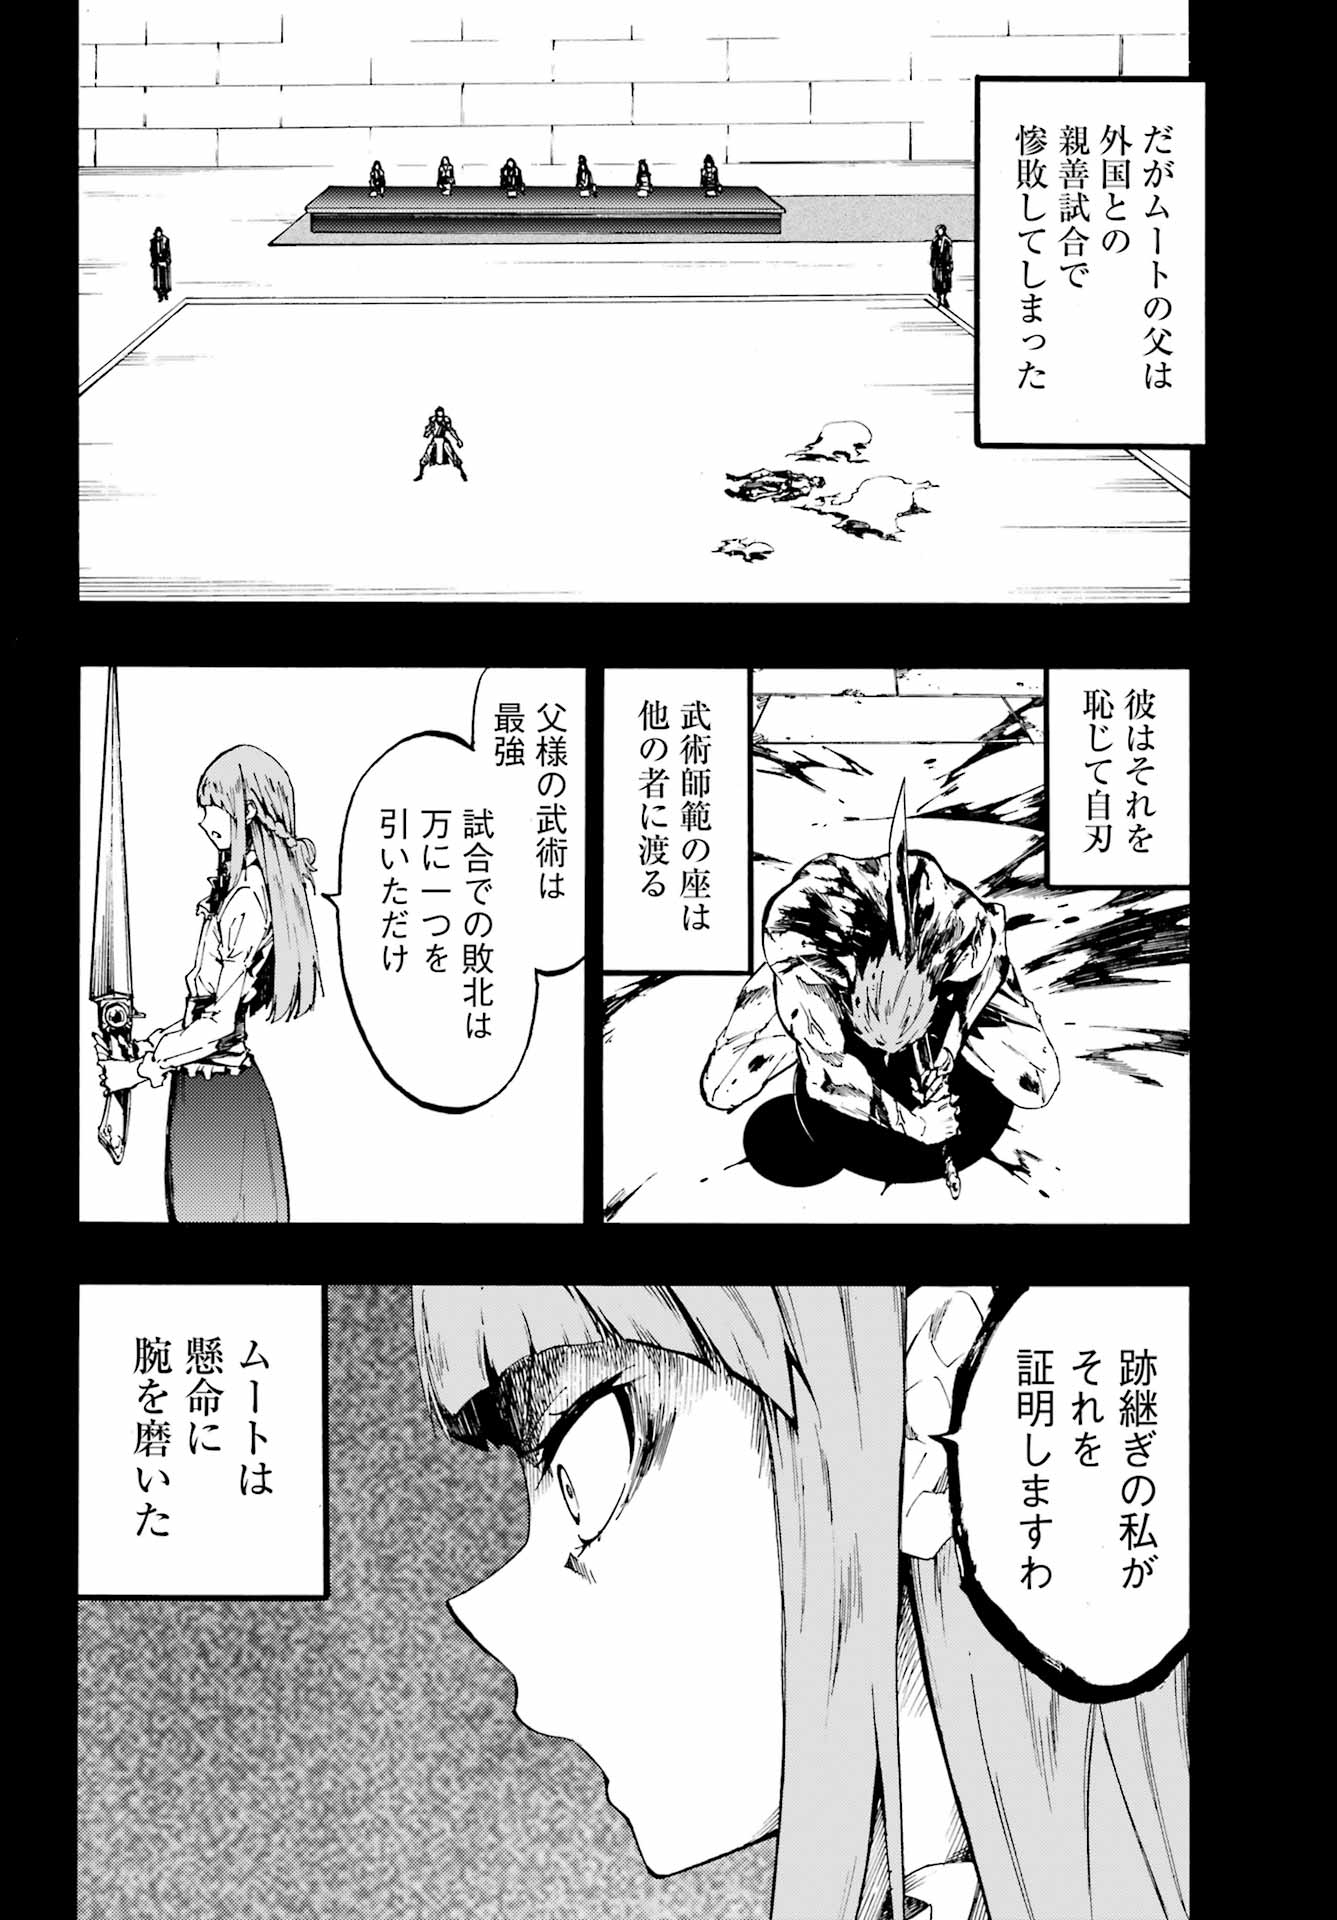 Gokusotsu Kraken - Chapter 19 - Page 8